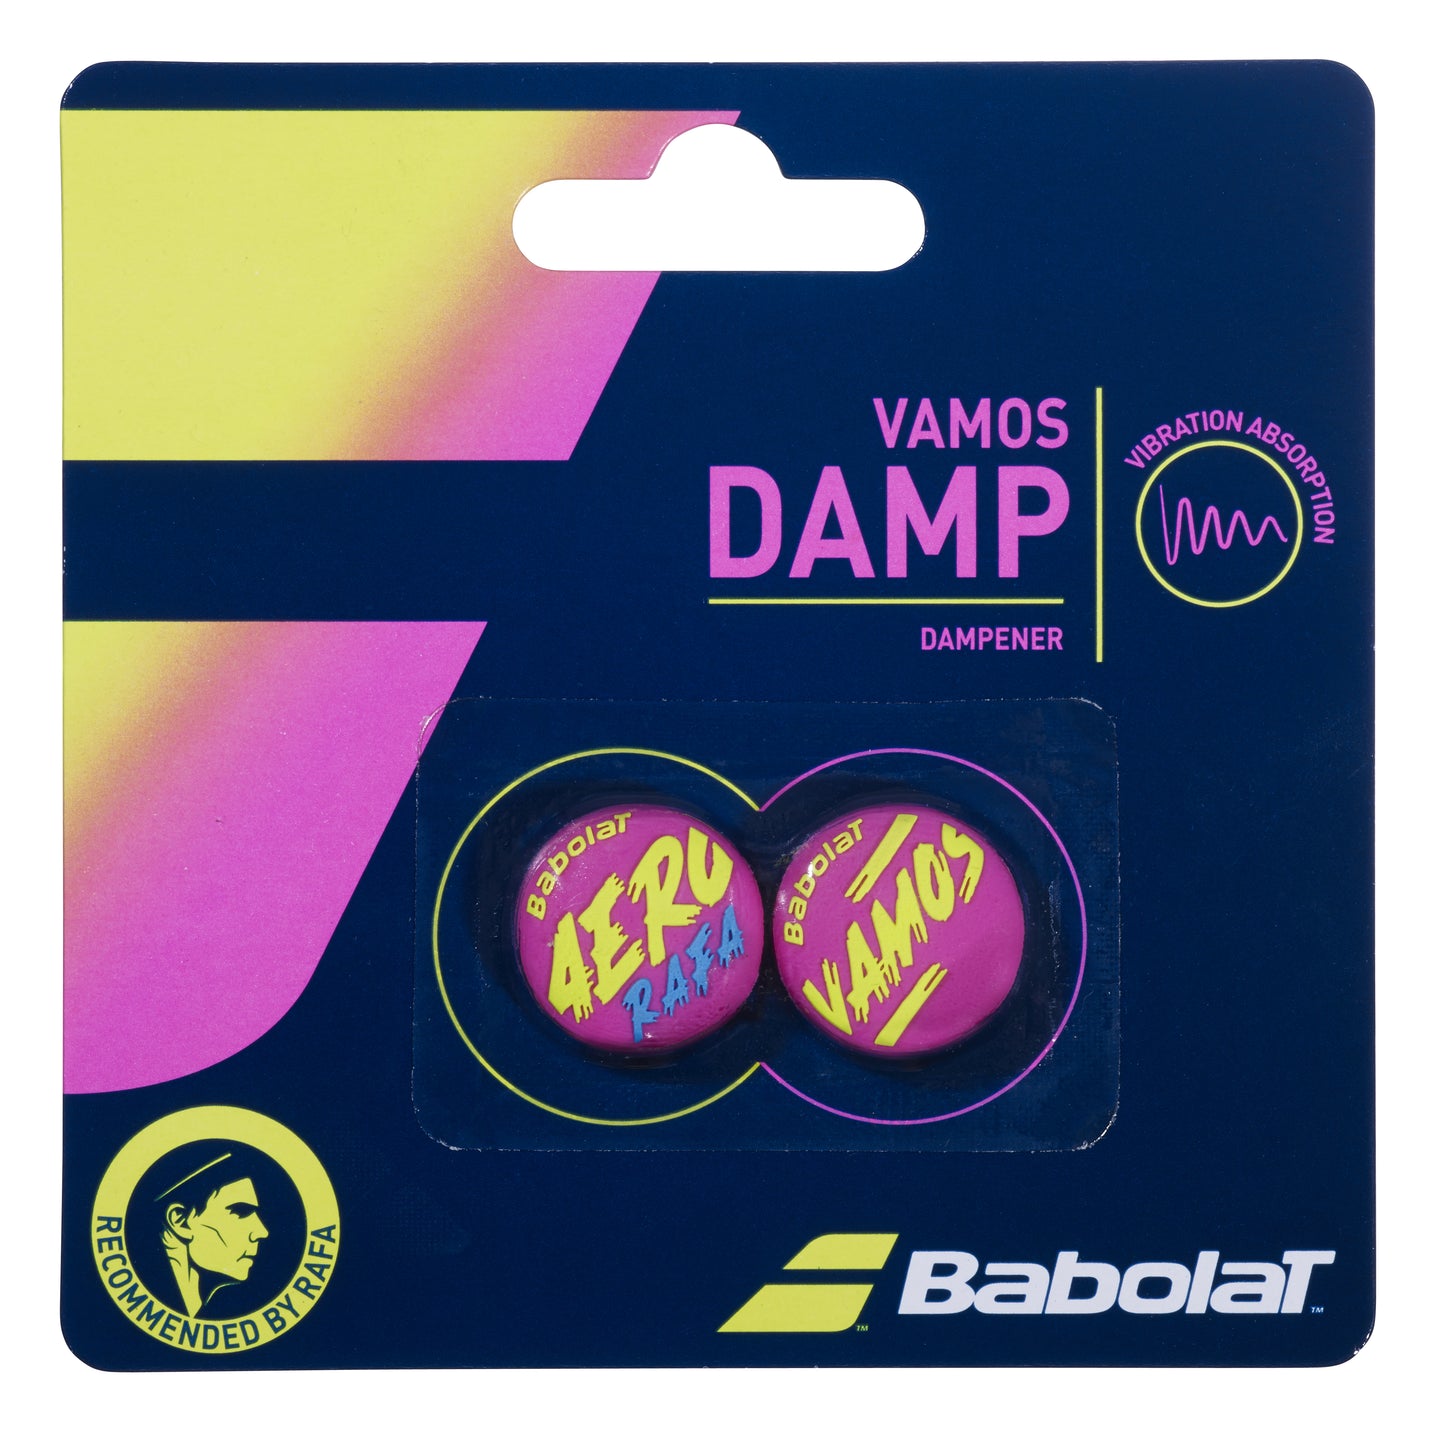 Babolat Vamos Damp Vibration Dampener